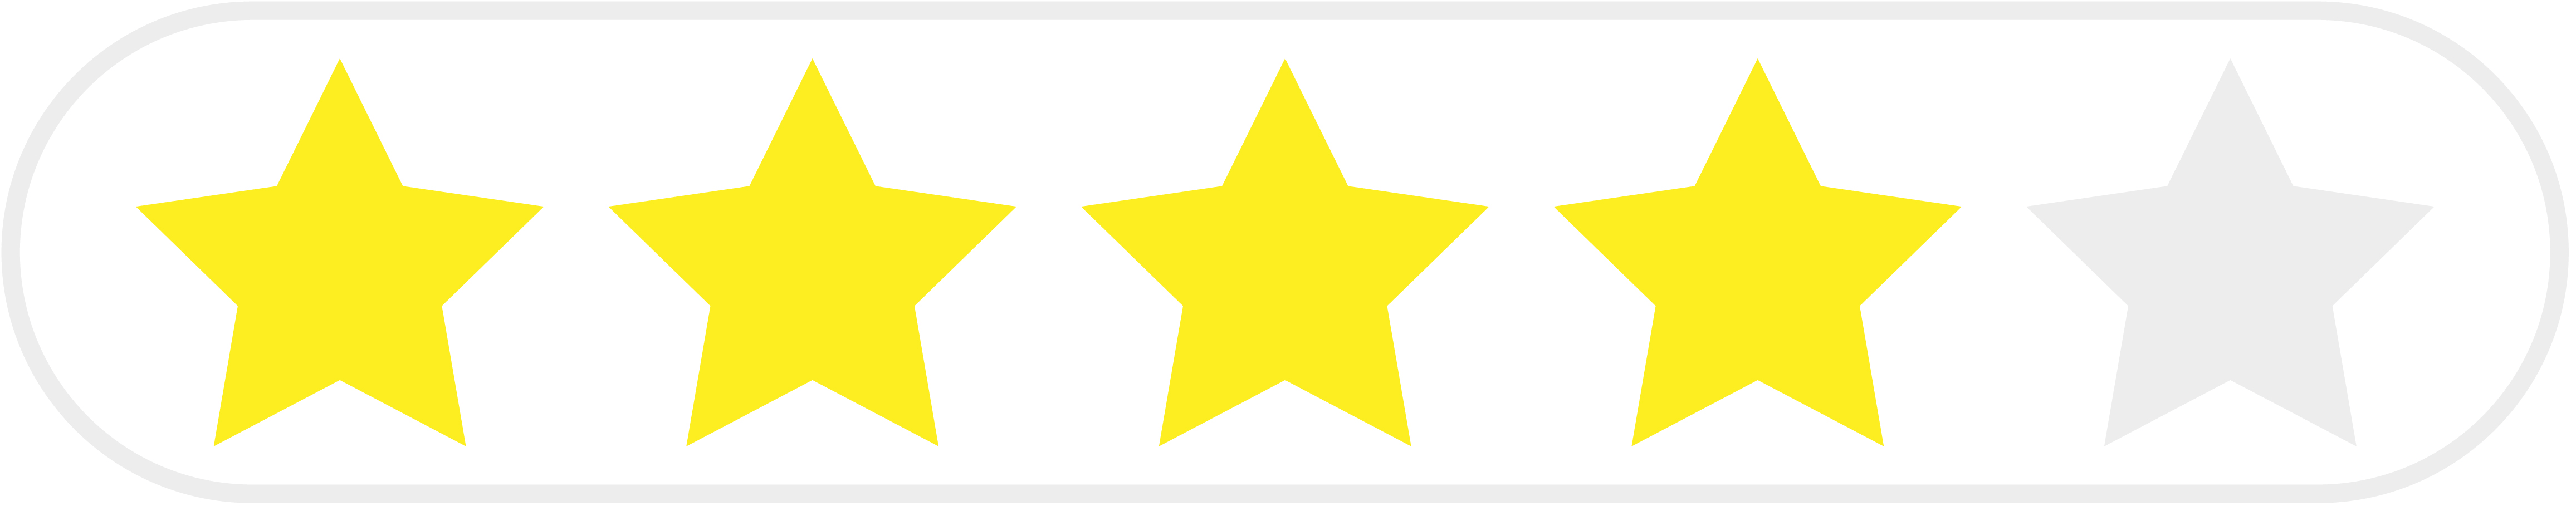 оценка четыре звезды